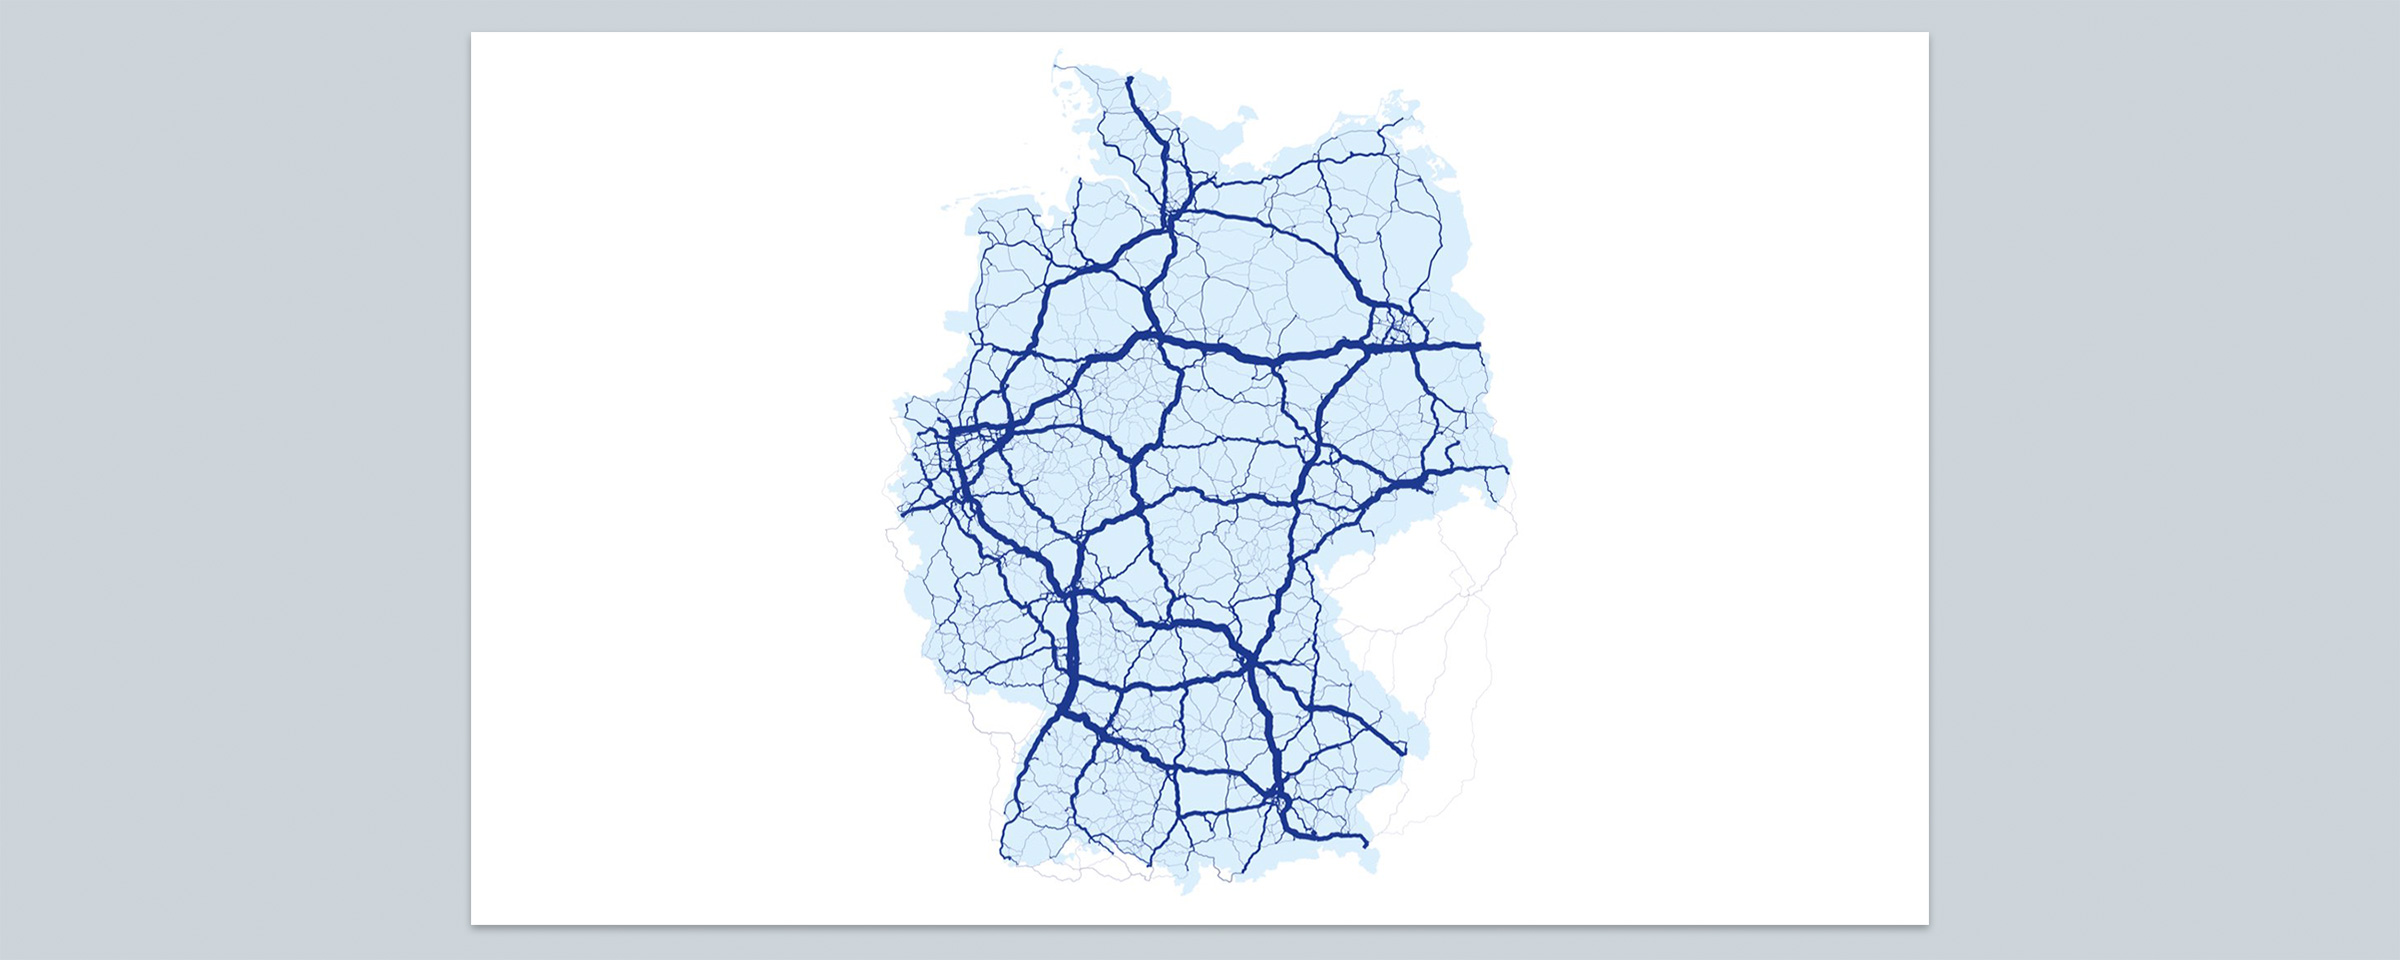 Data analysis based on traffic information